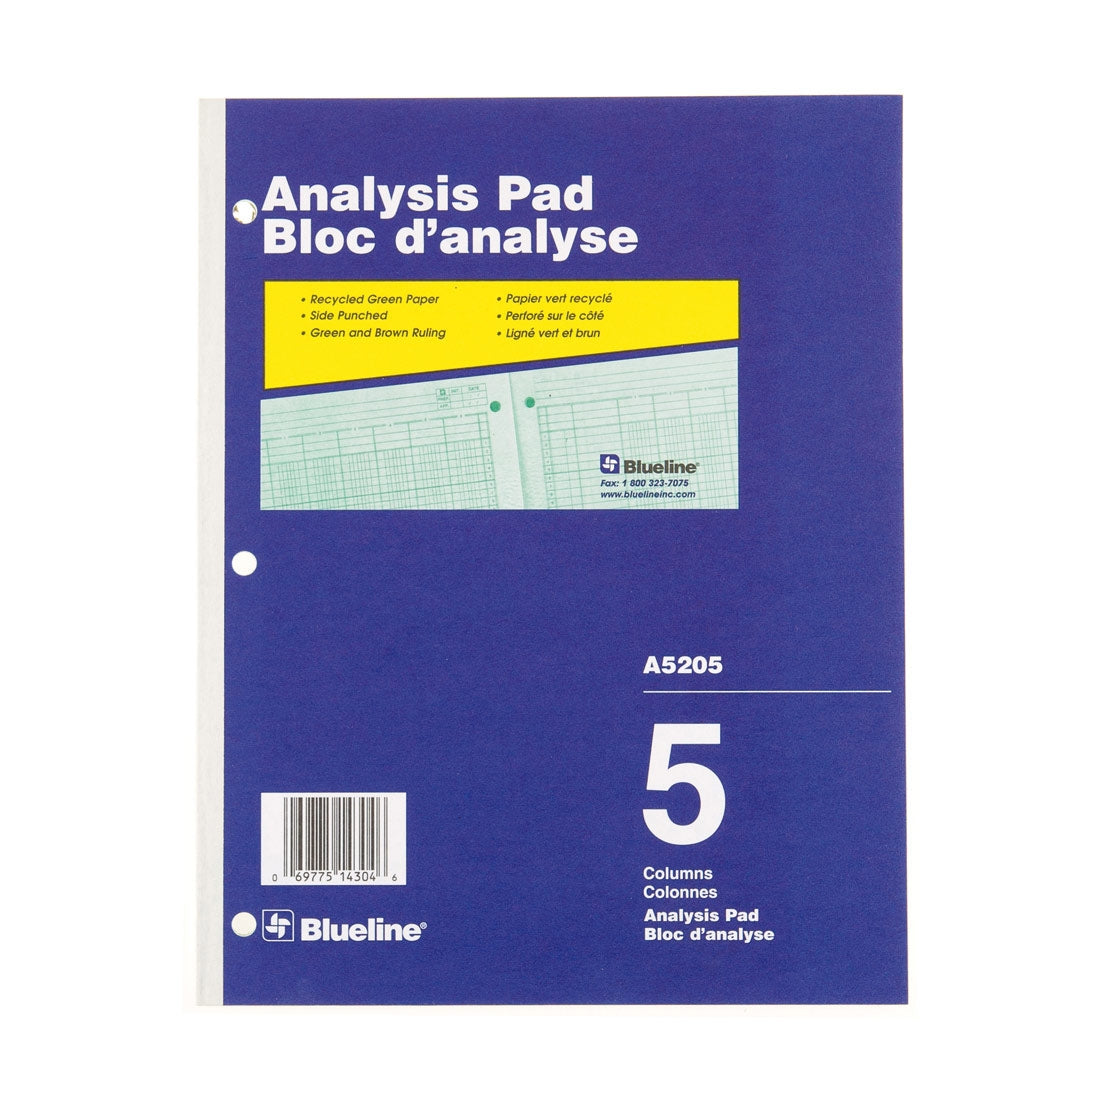 Analysis Pad - 5 Columns, A5205